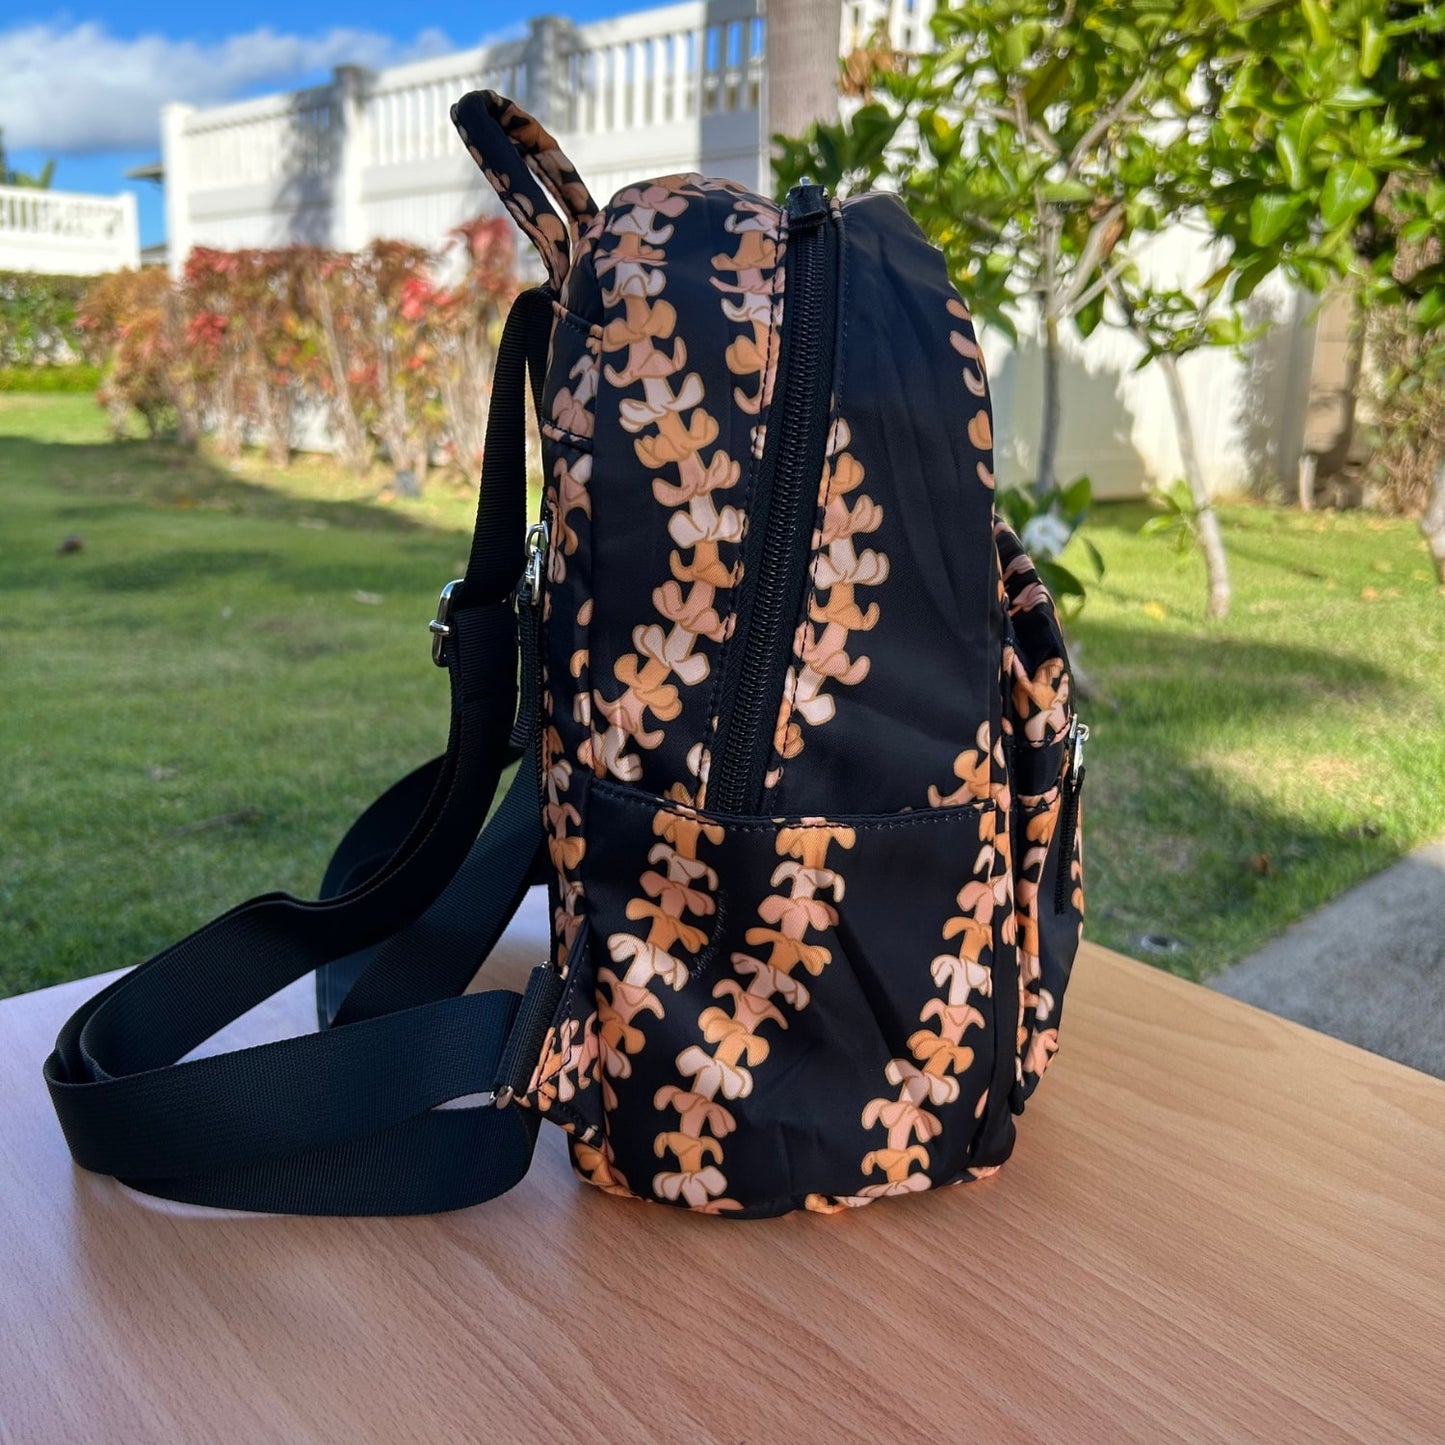 Puakenikeni small backpack purse from Puakenikeni Designs side view